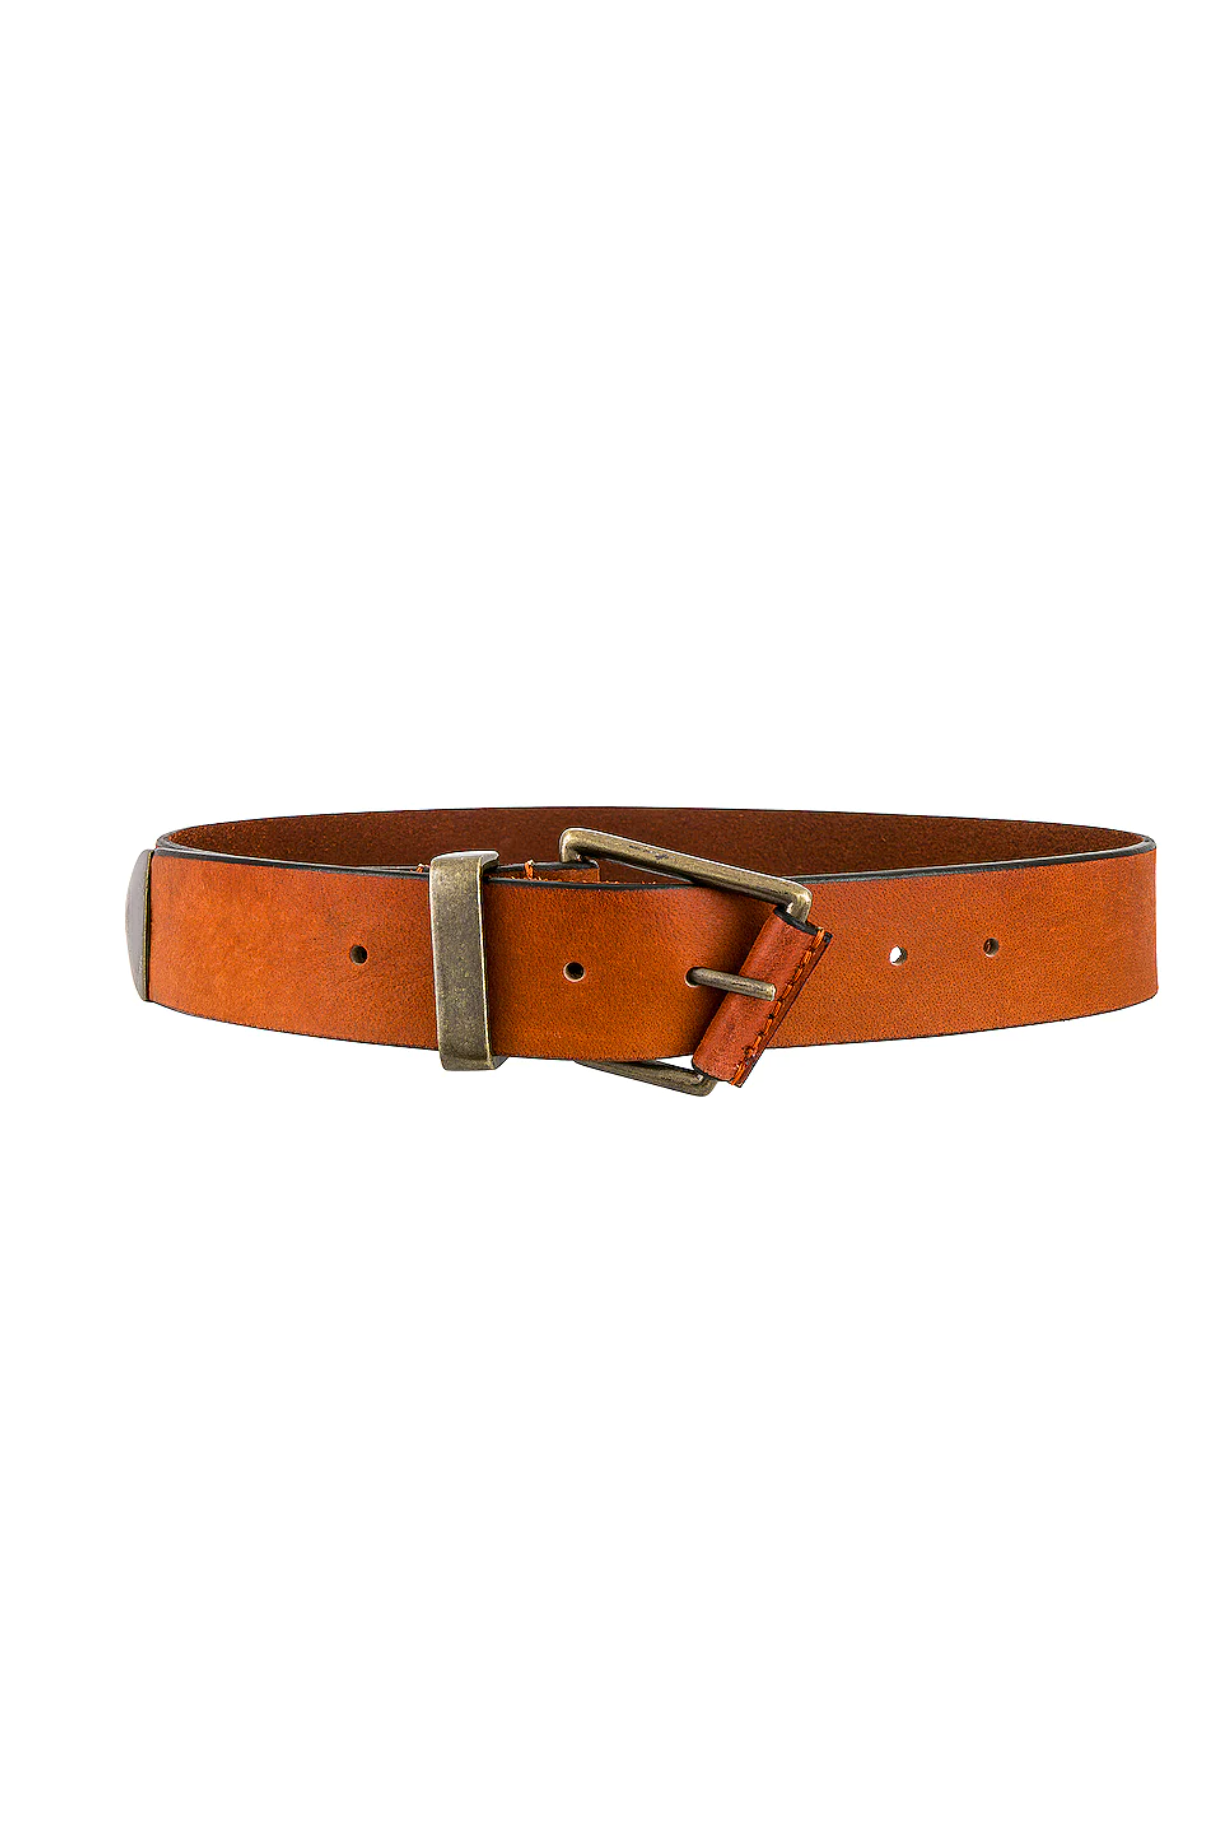 Getty Leather Belt - Sedona